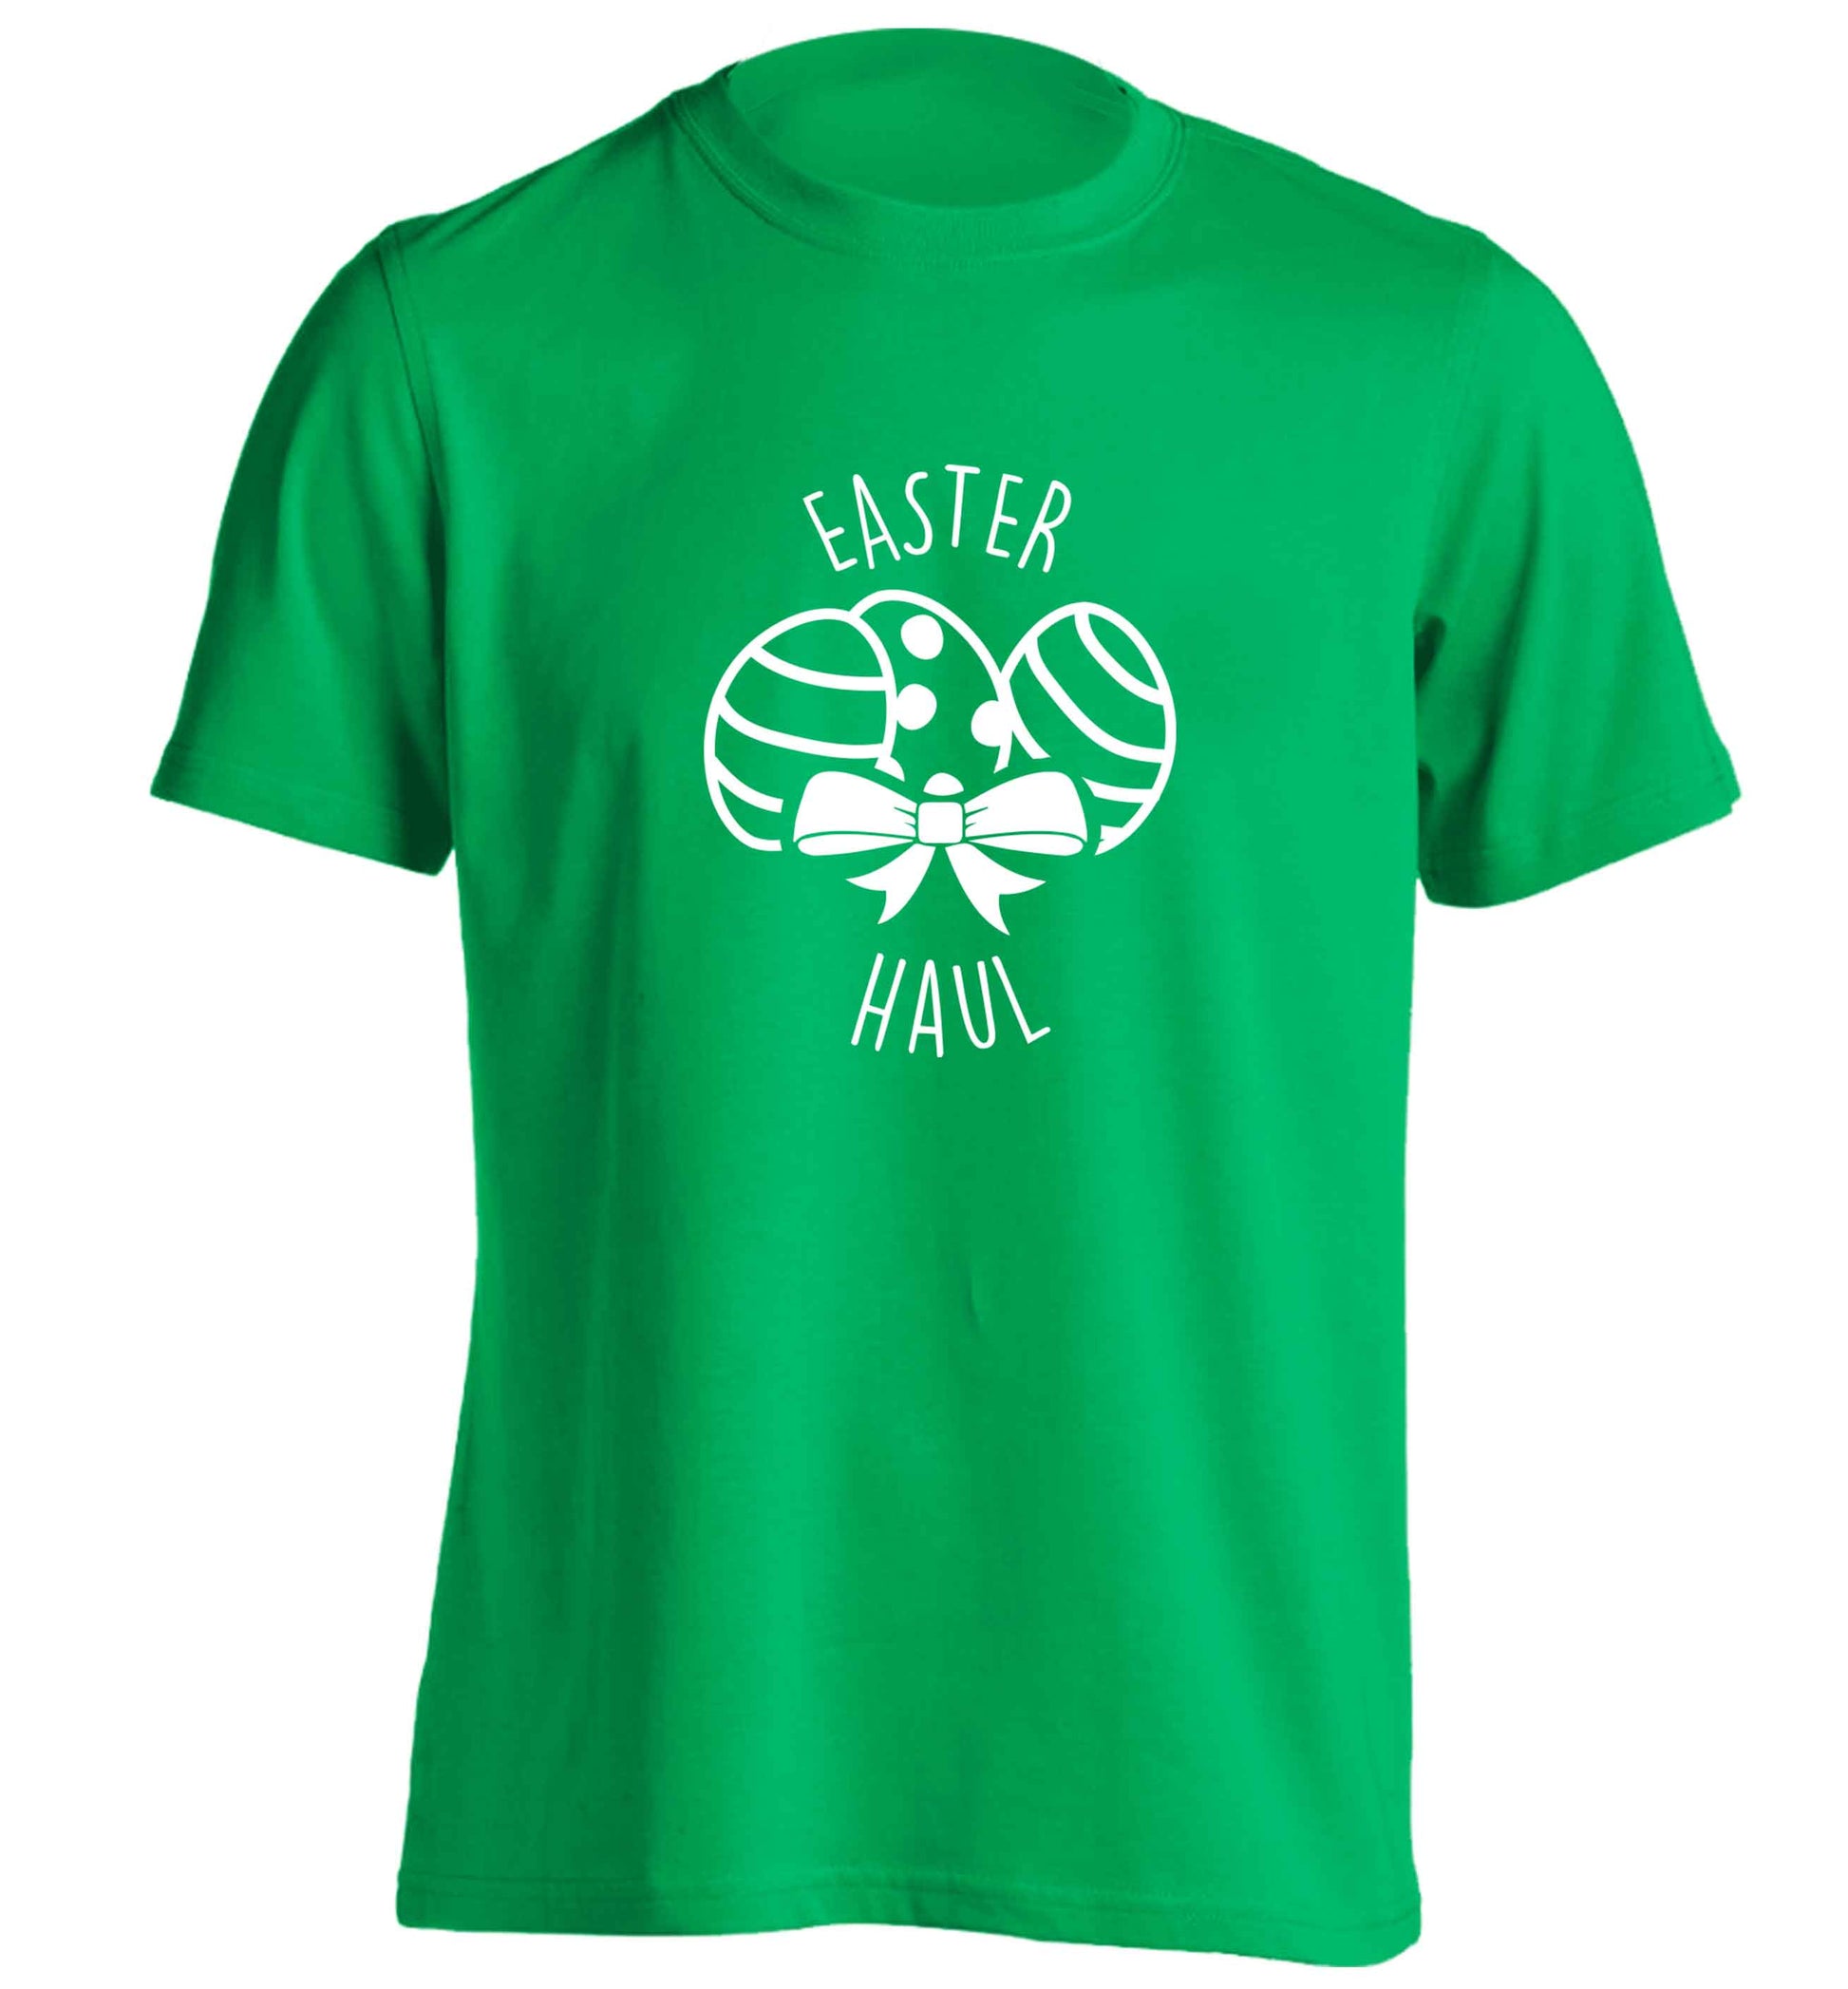 Easter haul adults unisex green Tshirt 2XL